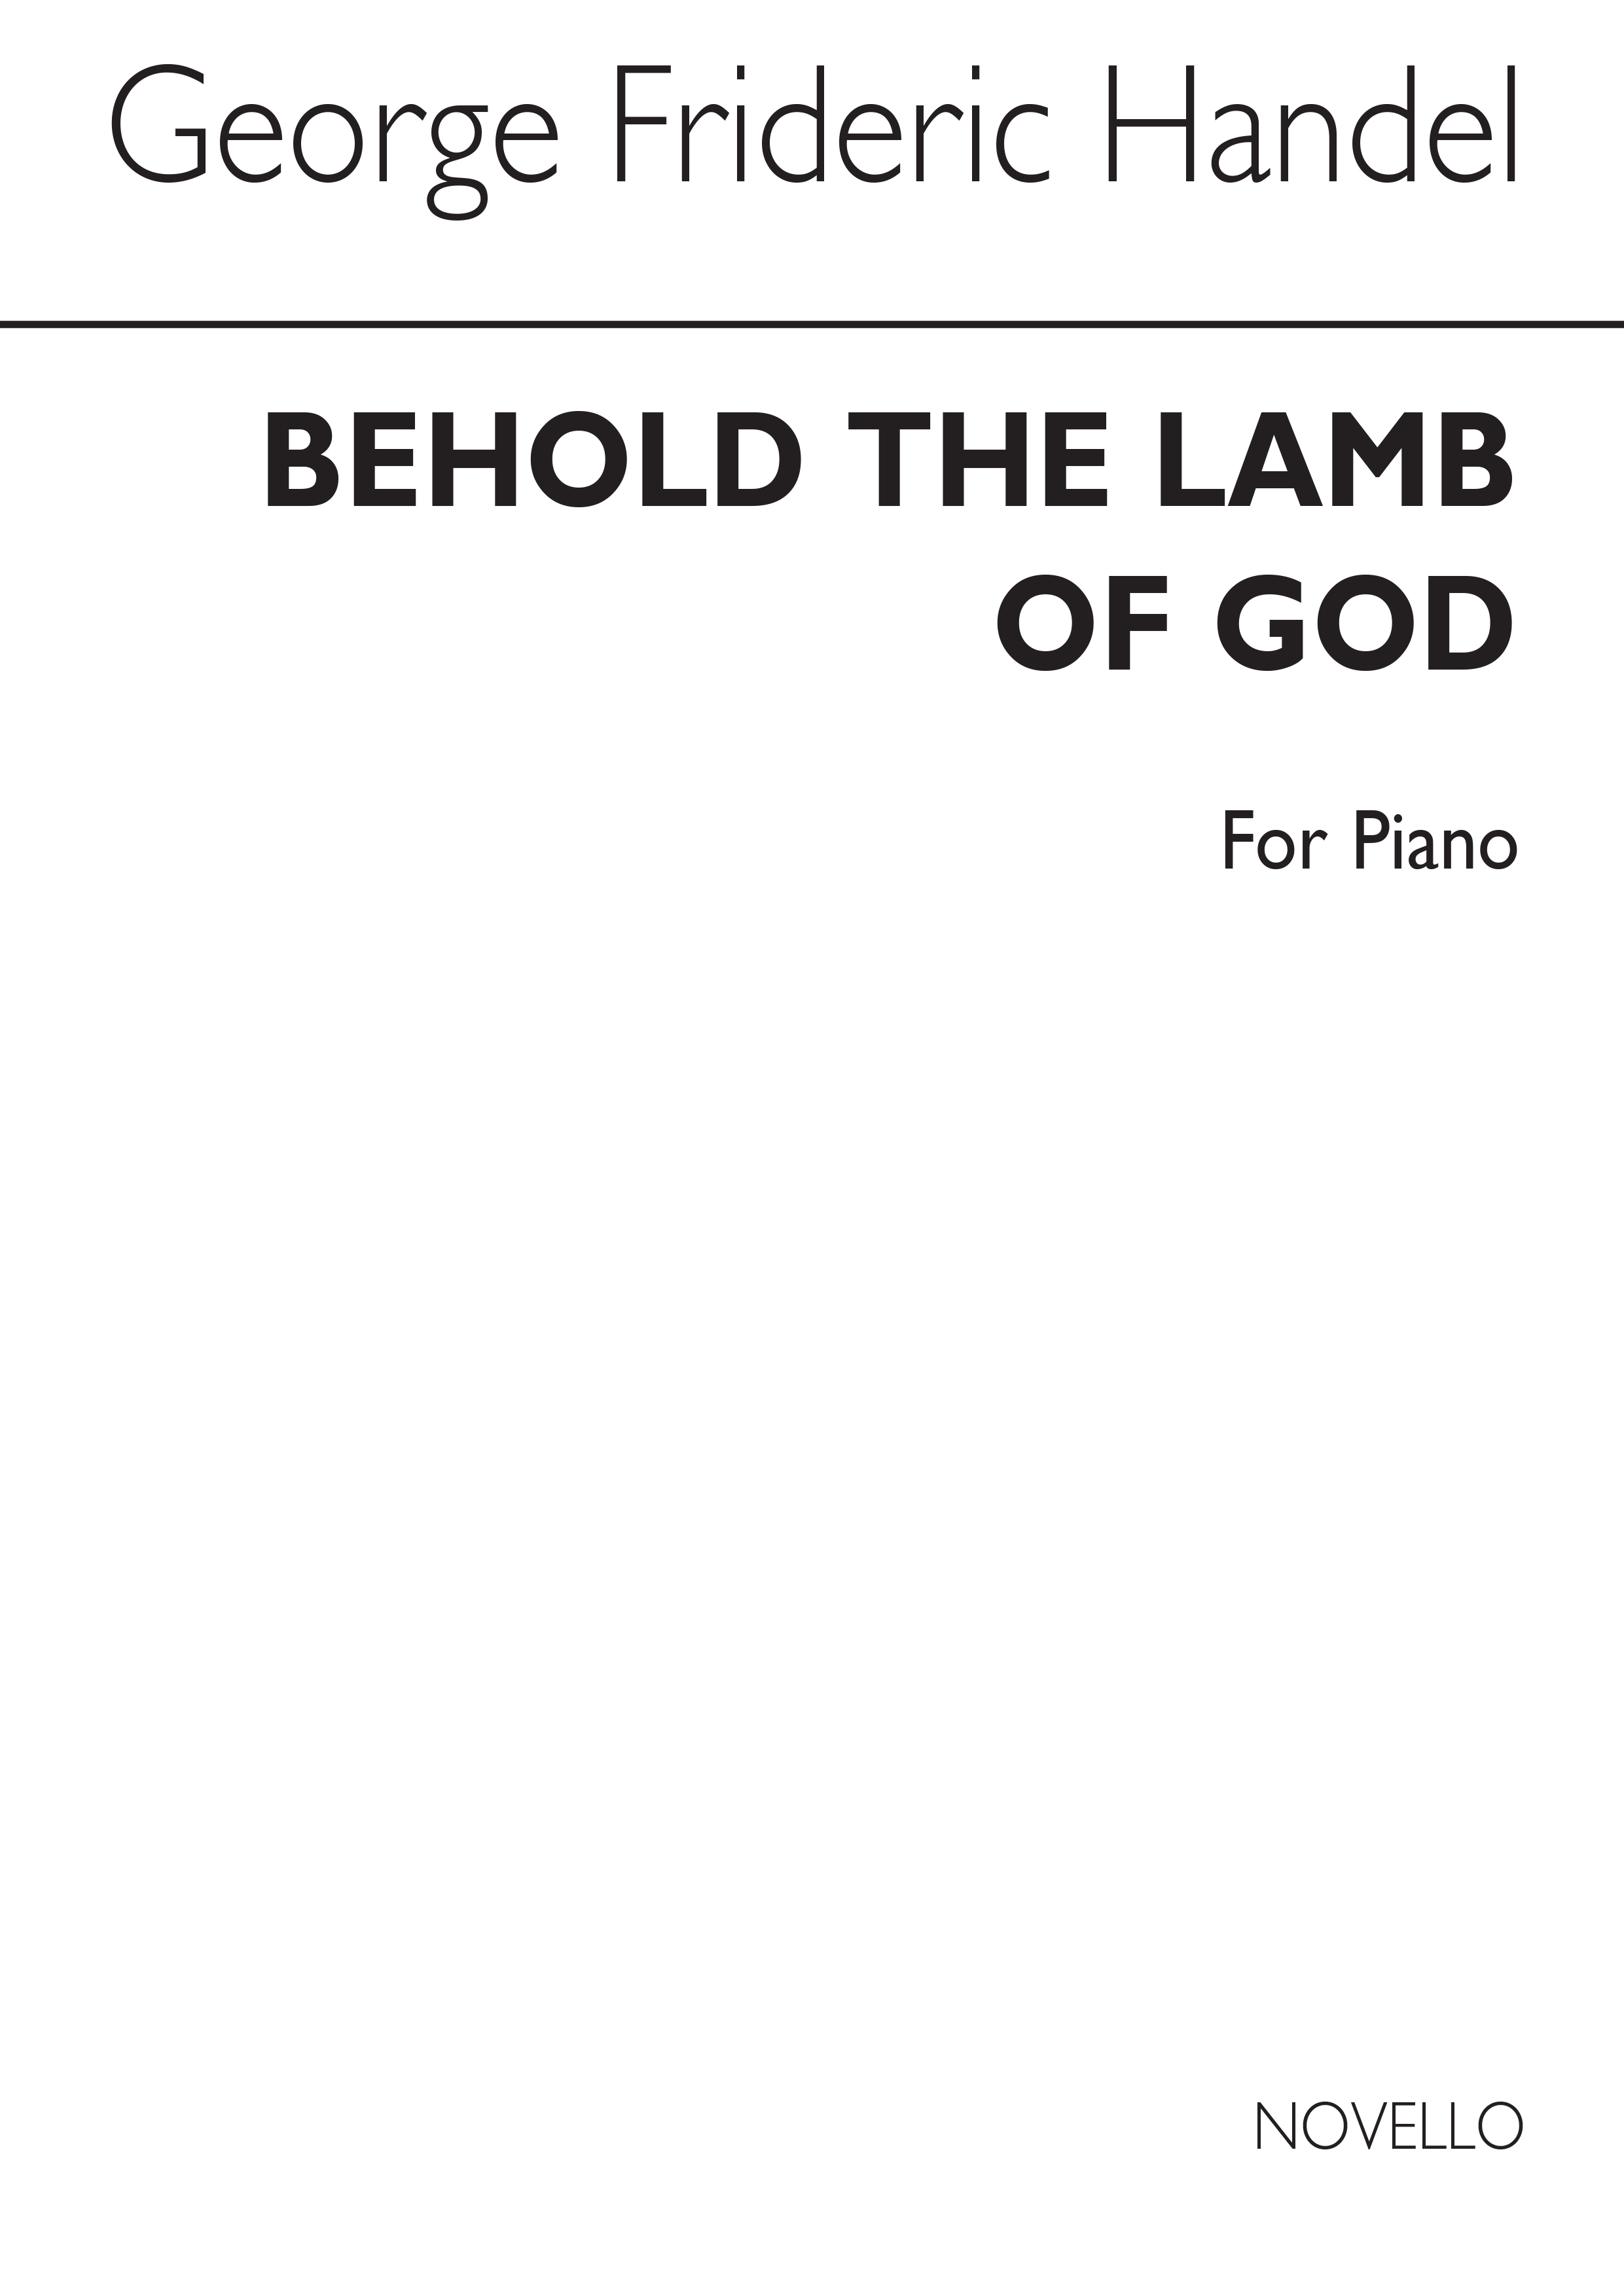 Handel, Gf Behold The Lamb Of God (Messiah) Organ